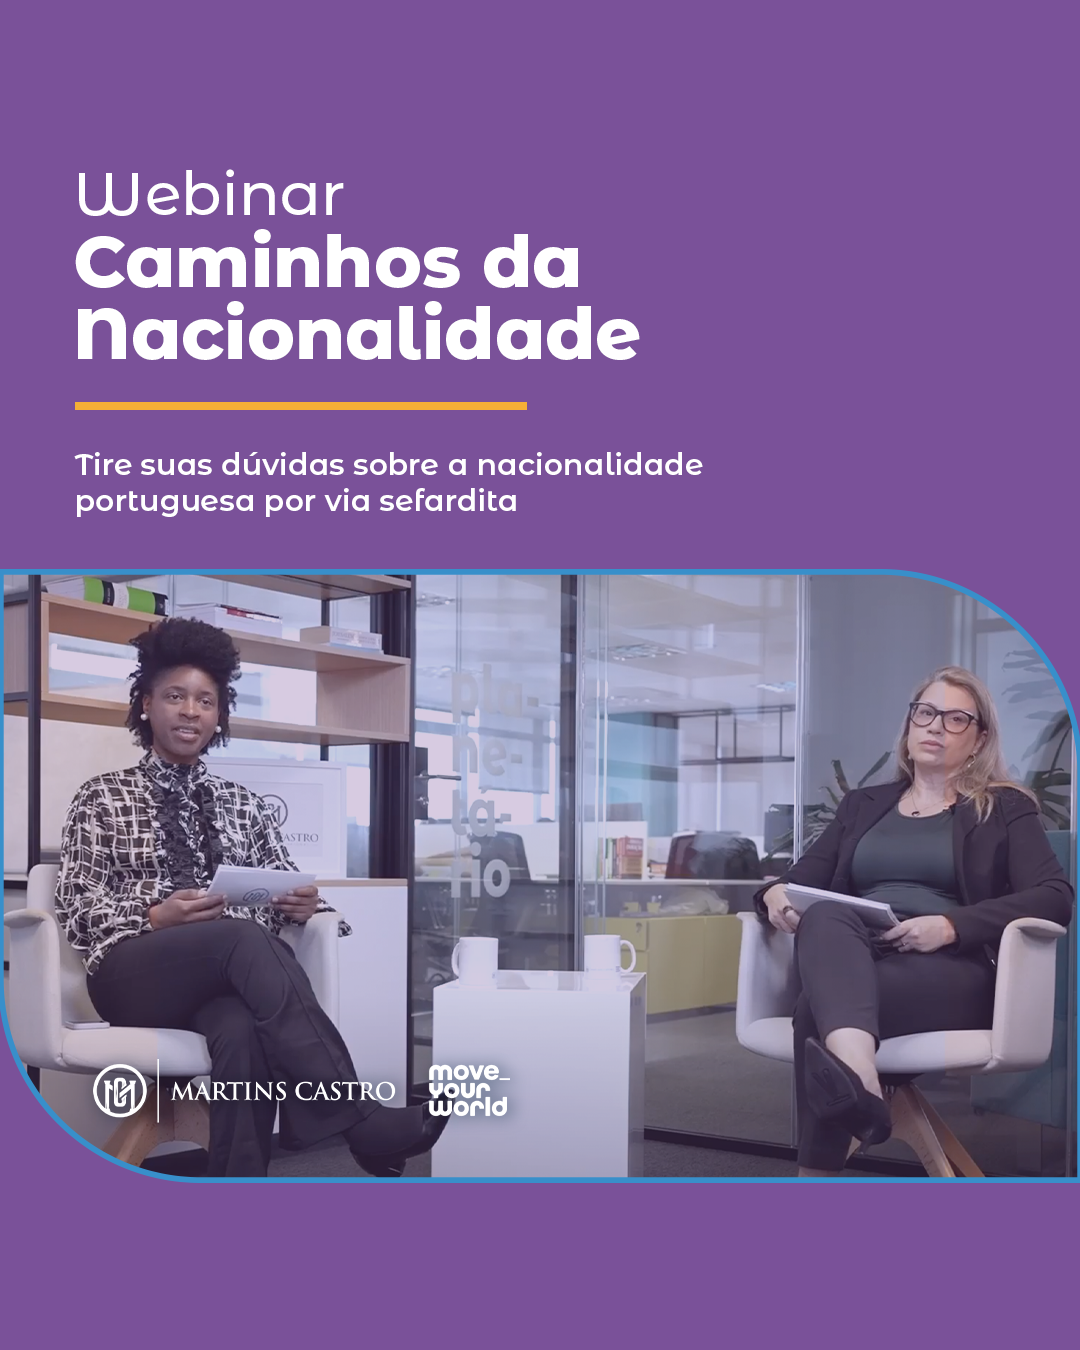 Webinar Caminhos da Nacionalidade esclarece dúvidas sobre a nacionalidade portuguesa por via sefardita